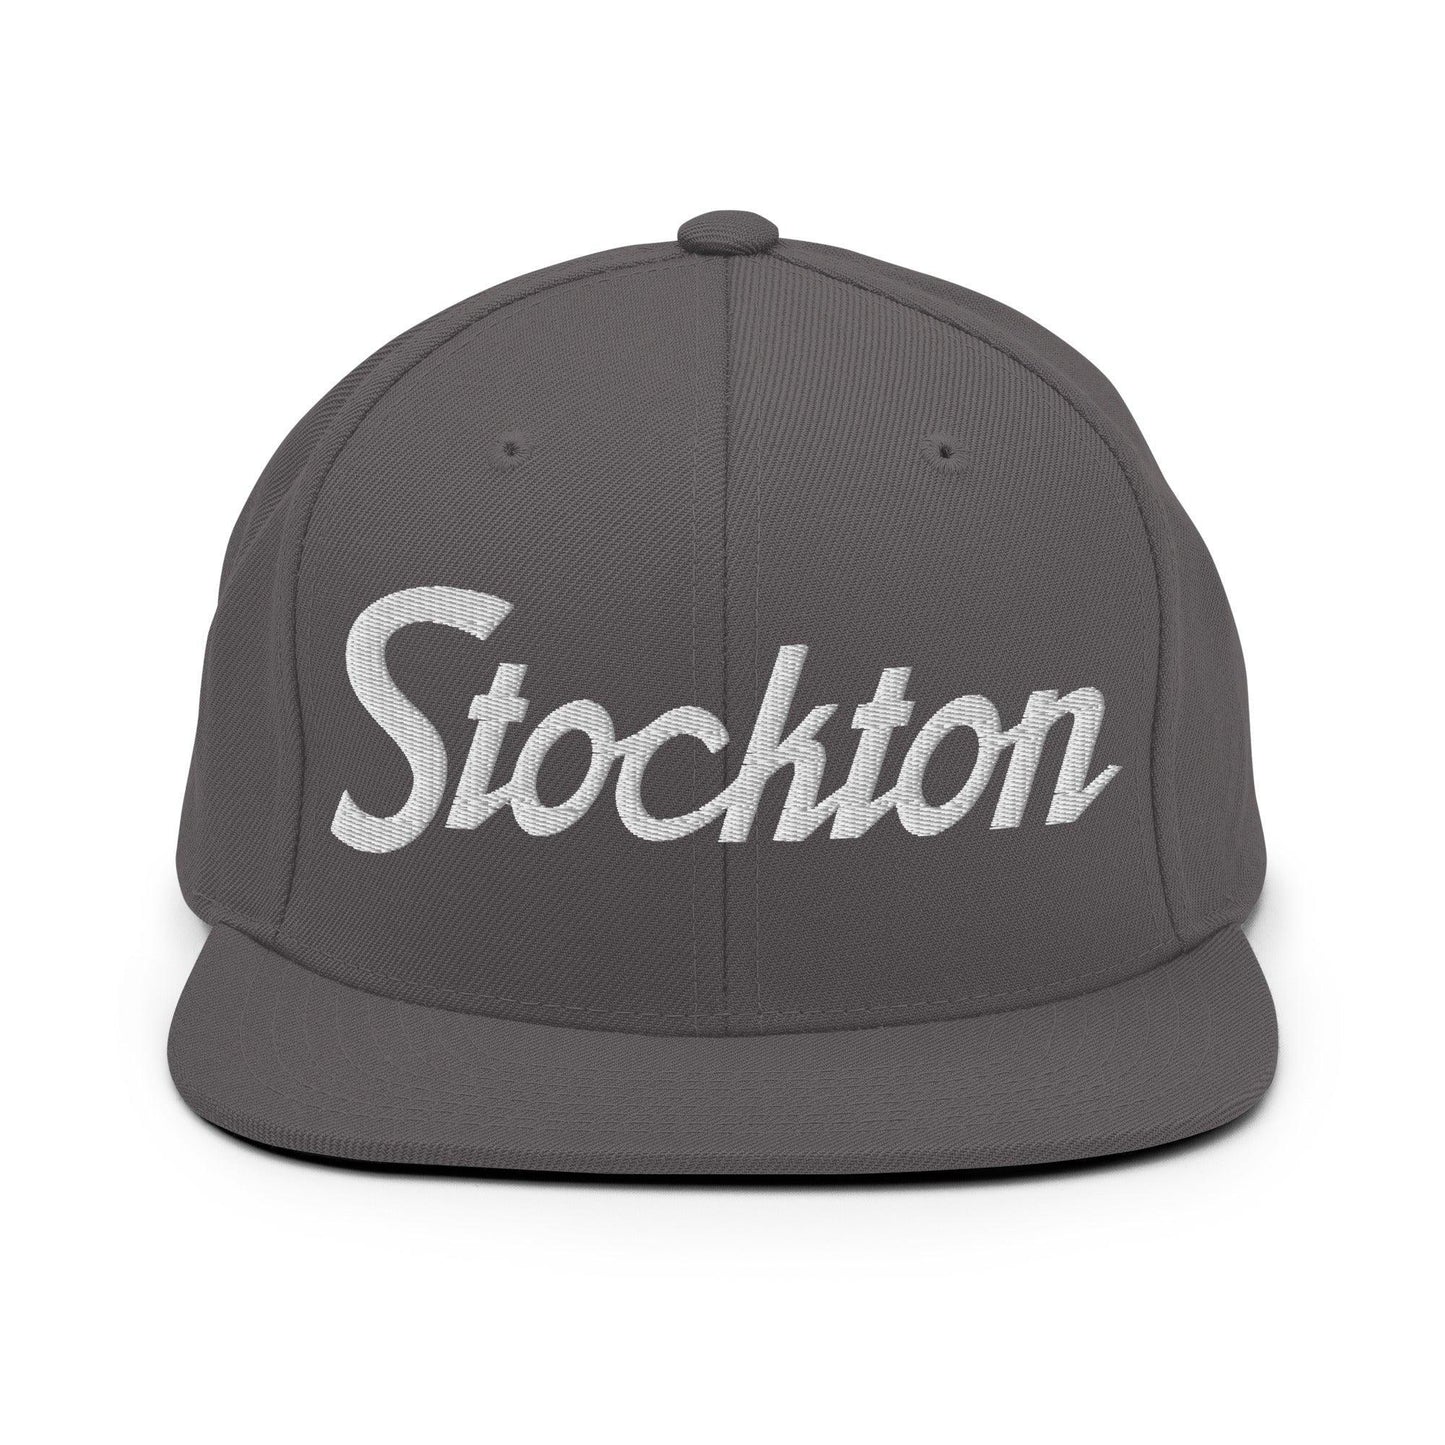 Stockton Script Snapback Hat Dark Grey